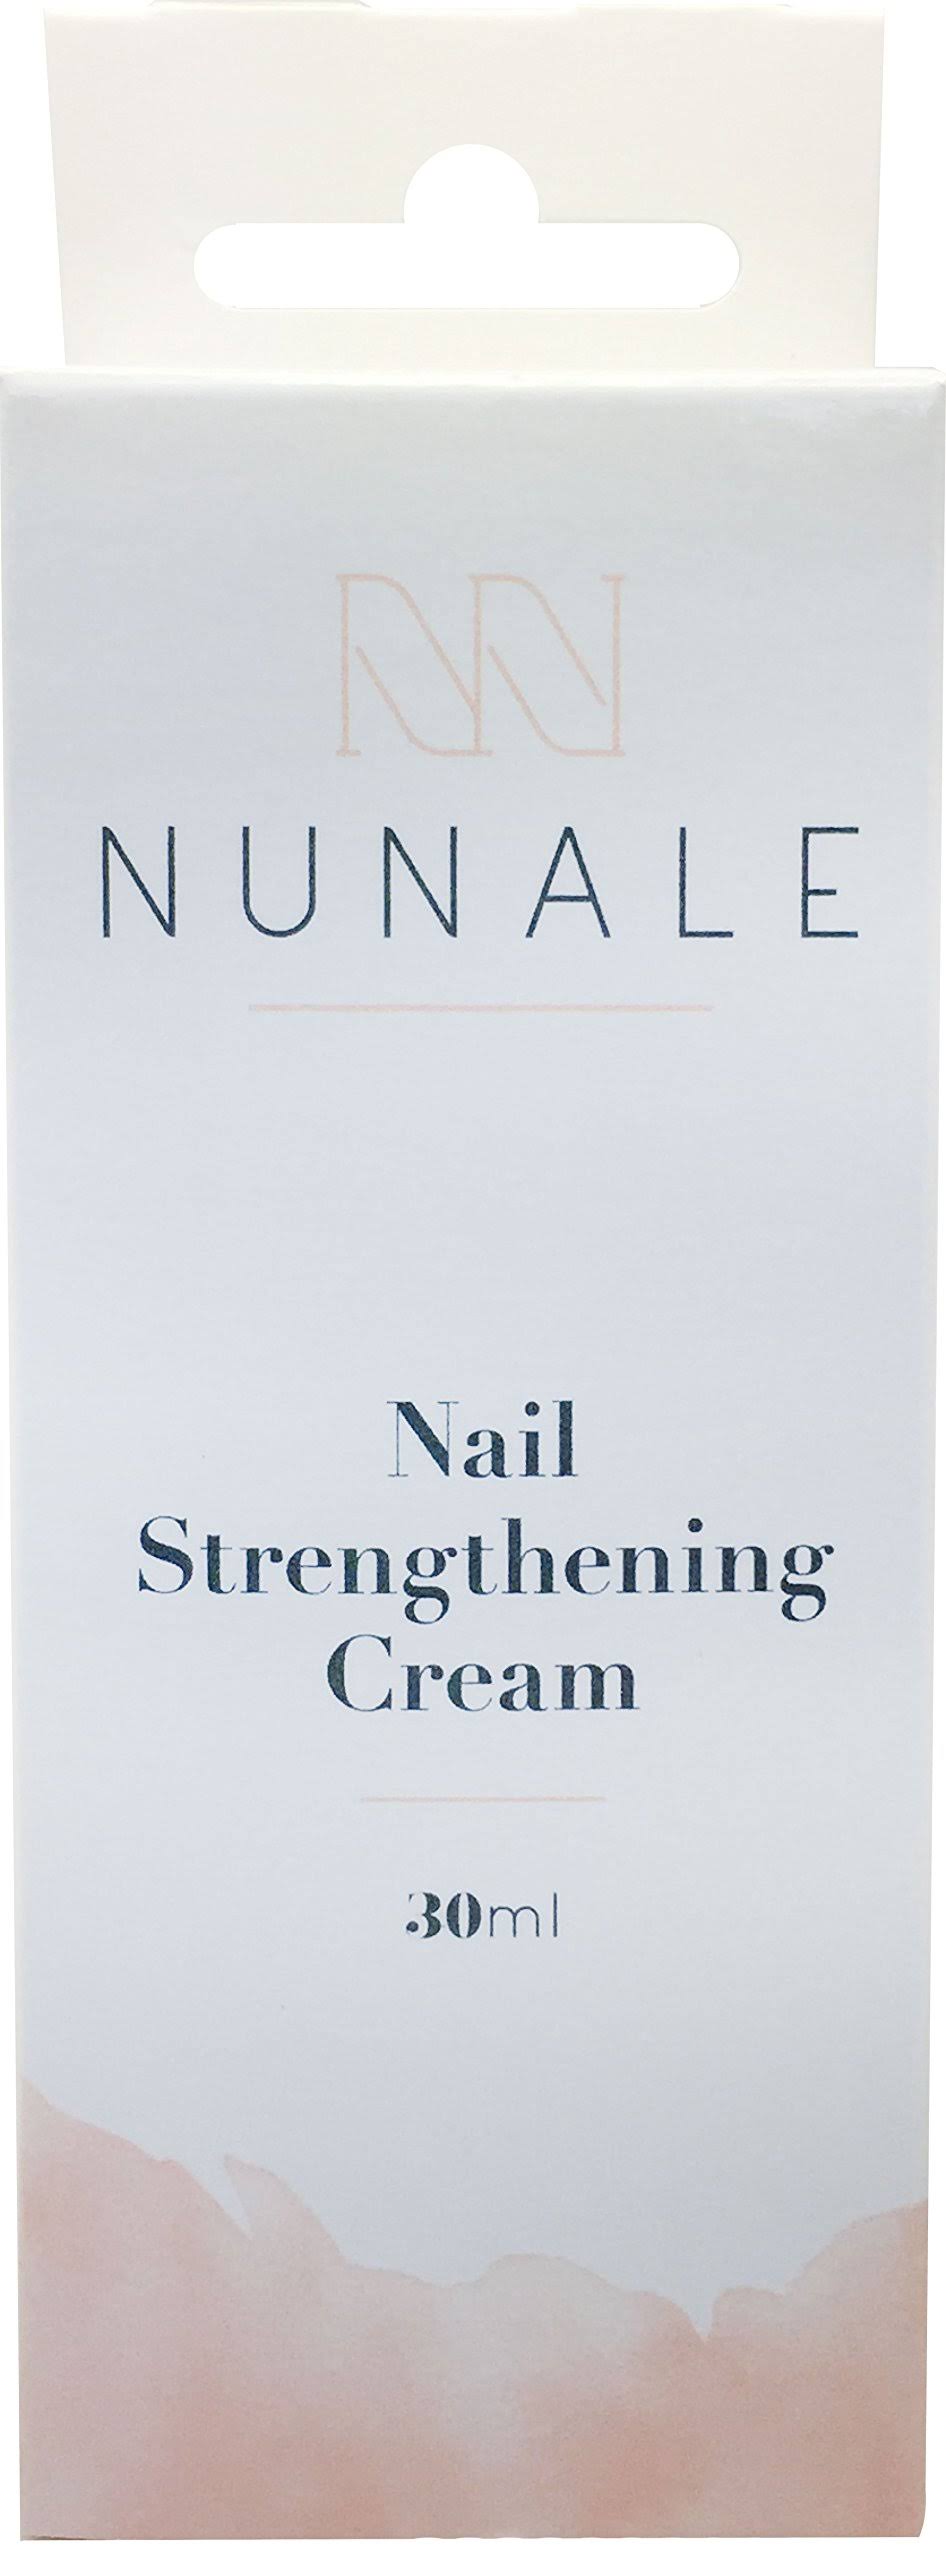 Nu Nale Nail Strengthening Cream (30ml)